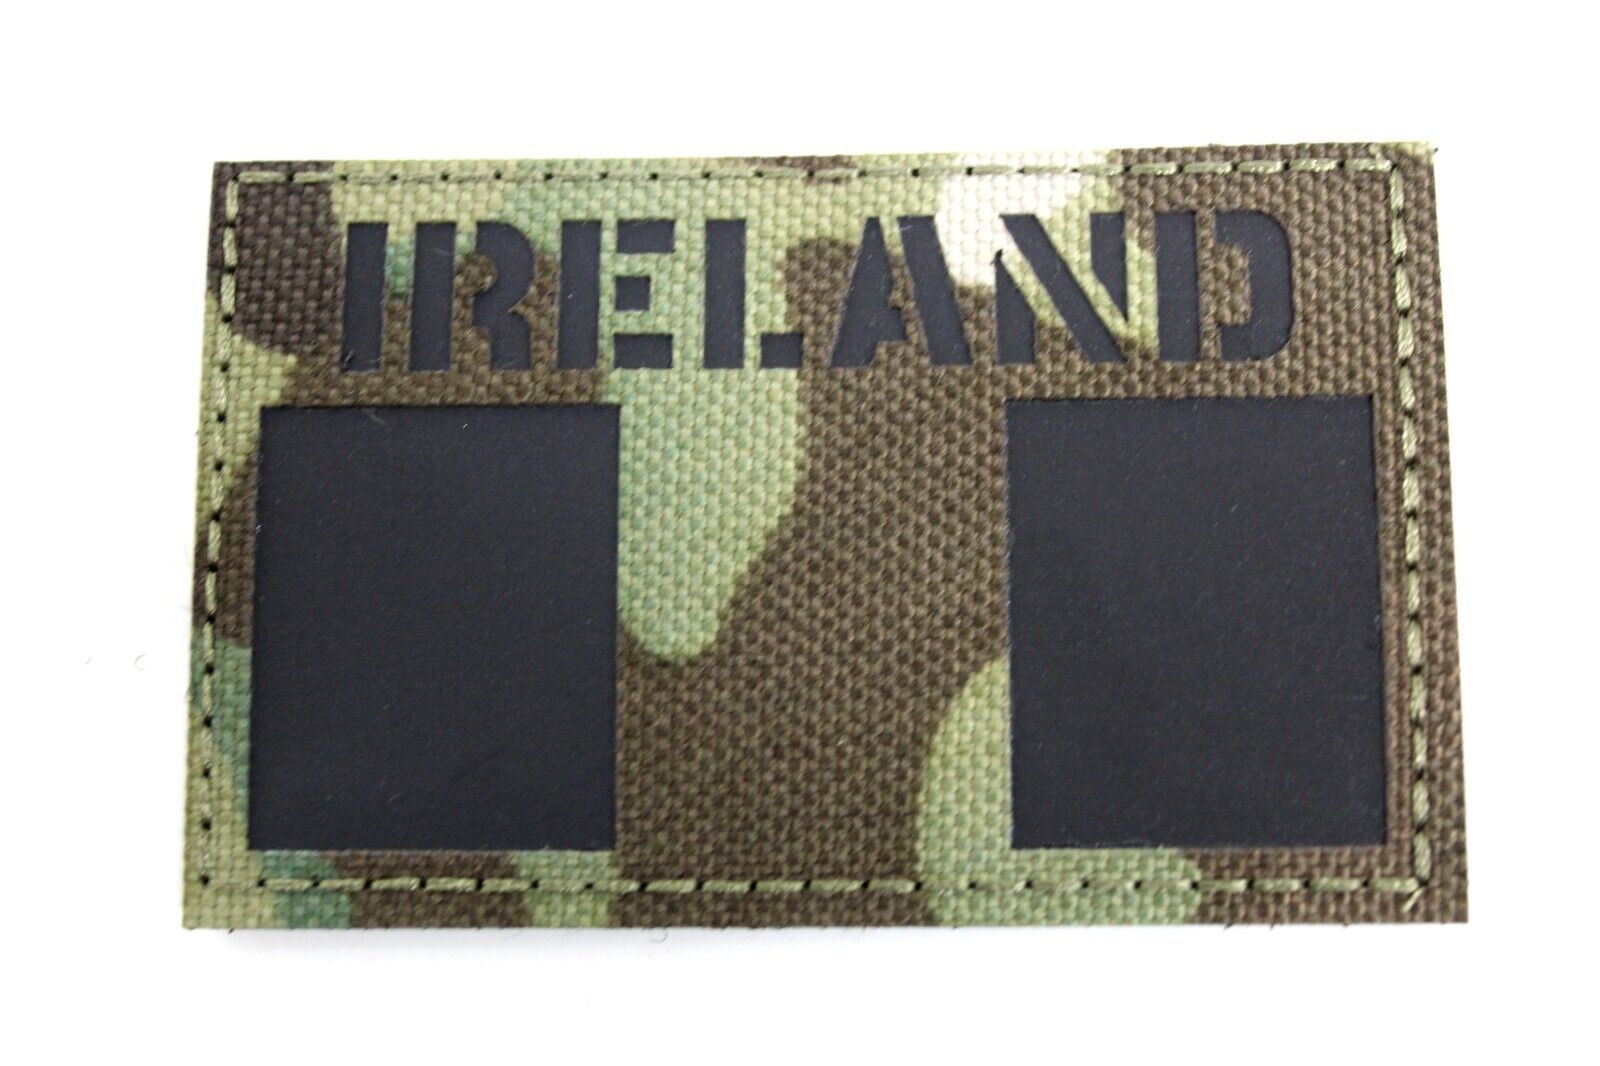 Ireland MULTICAM Patch MTP Army Military Uniform Insignia Latest Issue Irish